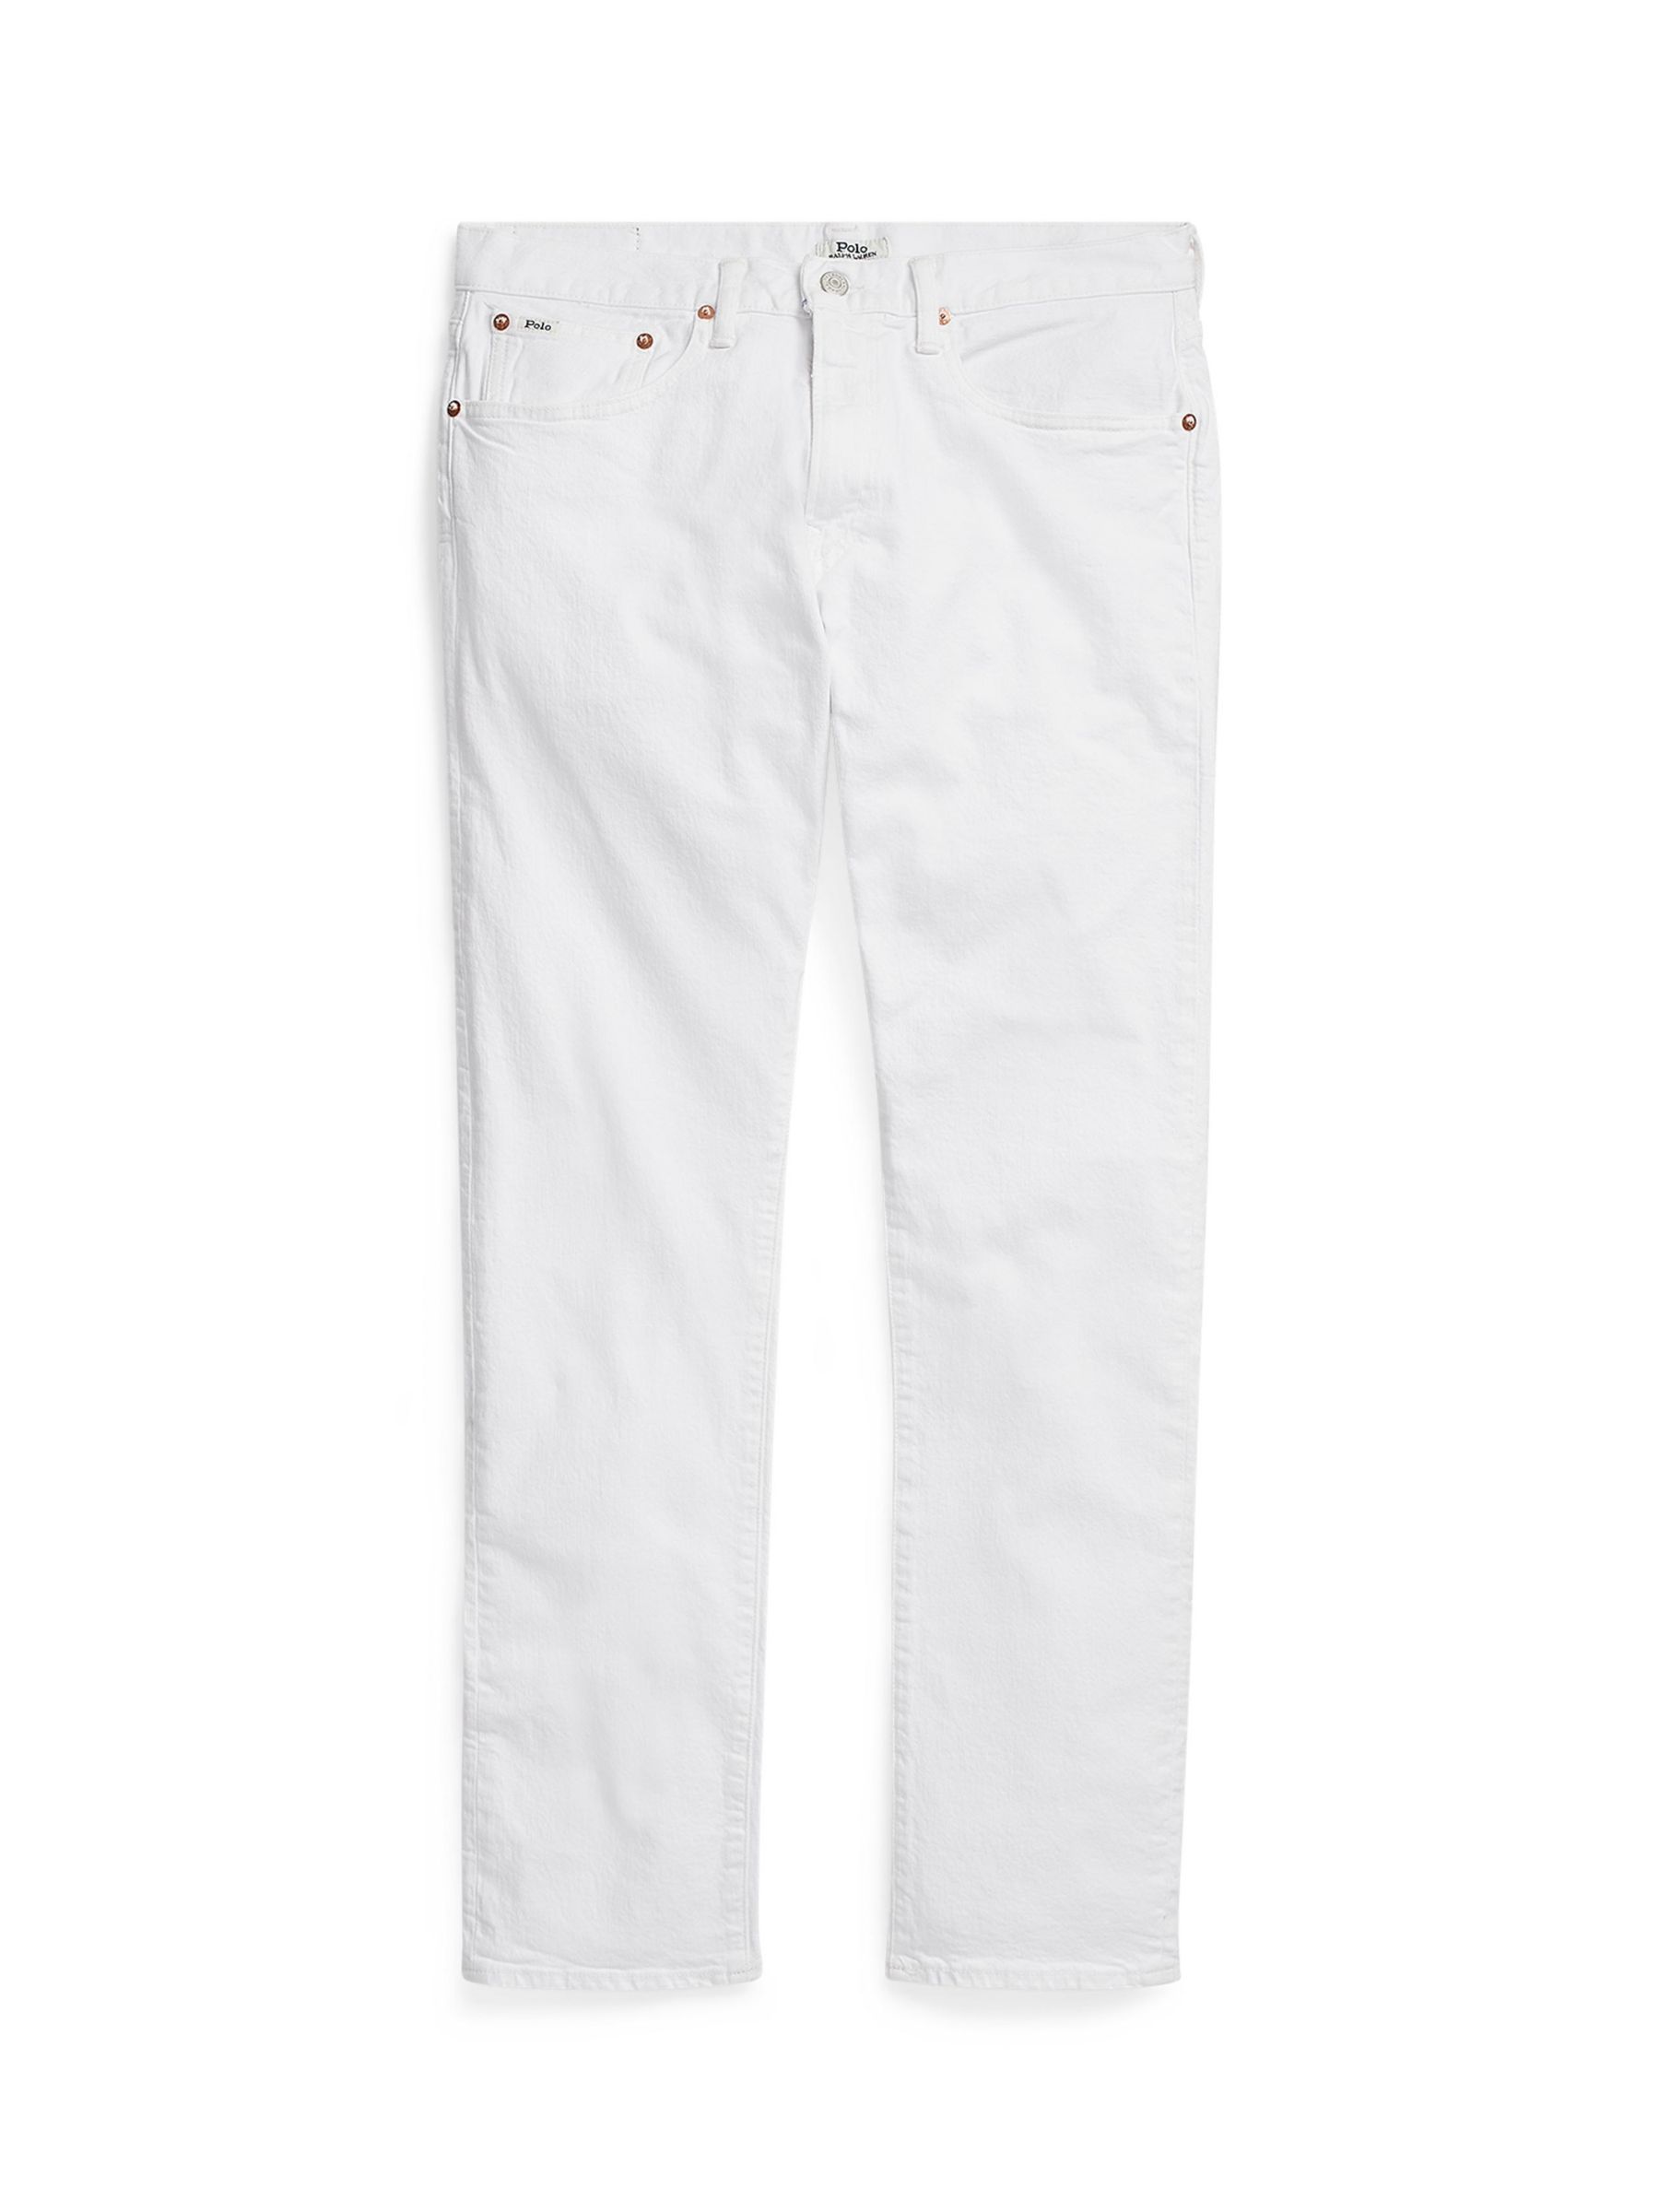 Ralph Lauren Sullivan Slim Stretch Fit Five Pocket Jeans, White, 34R